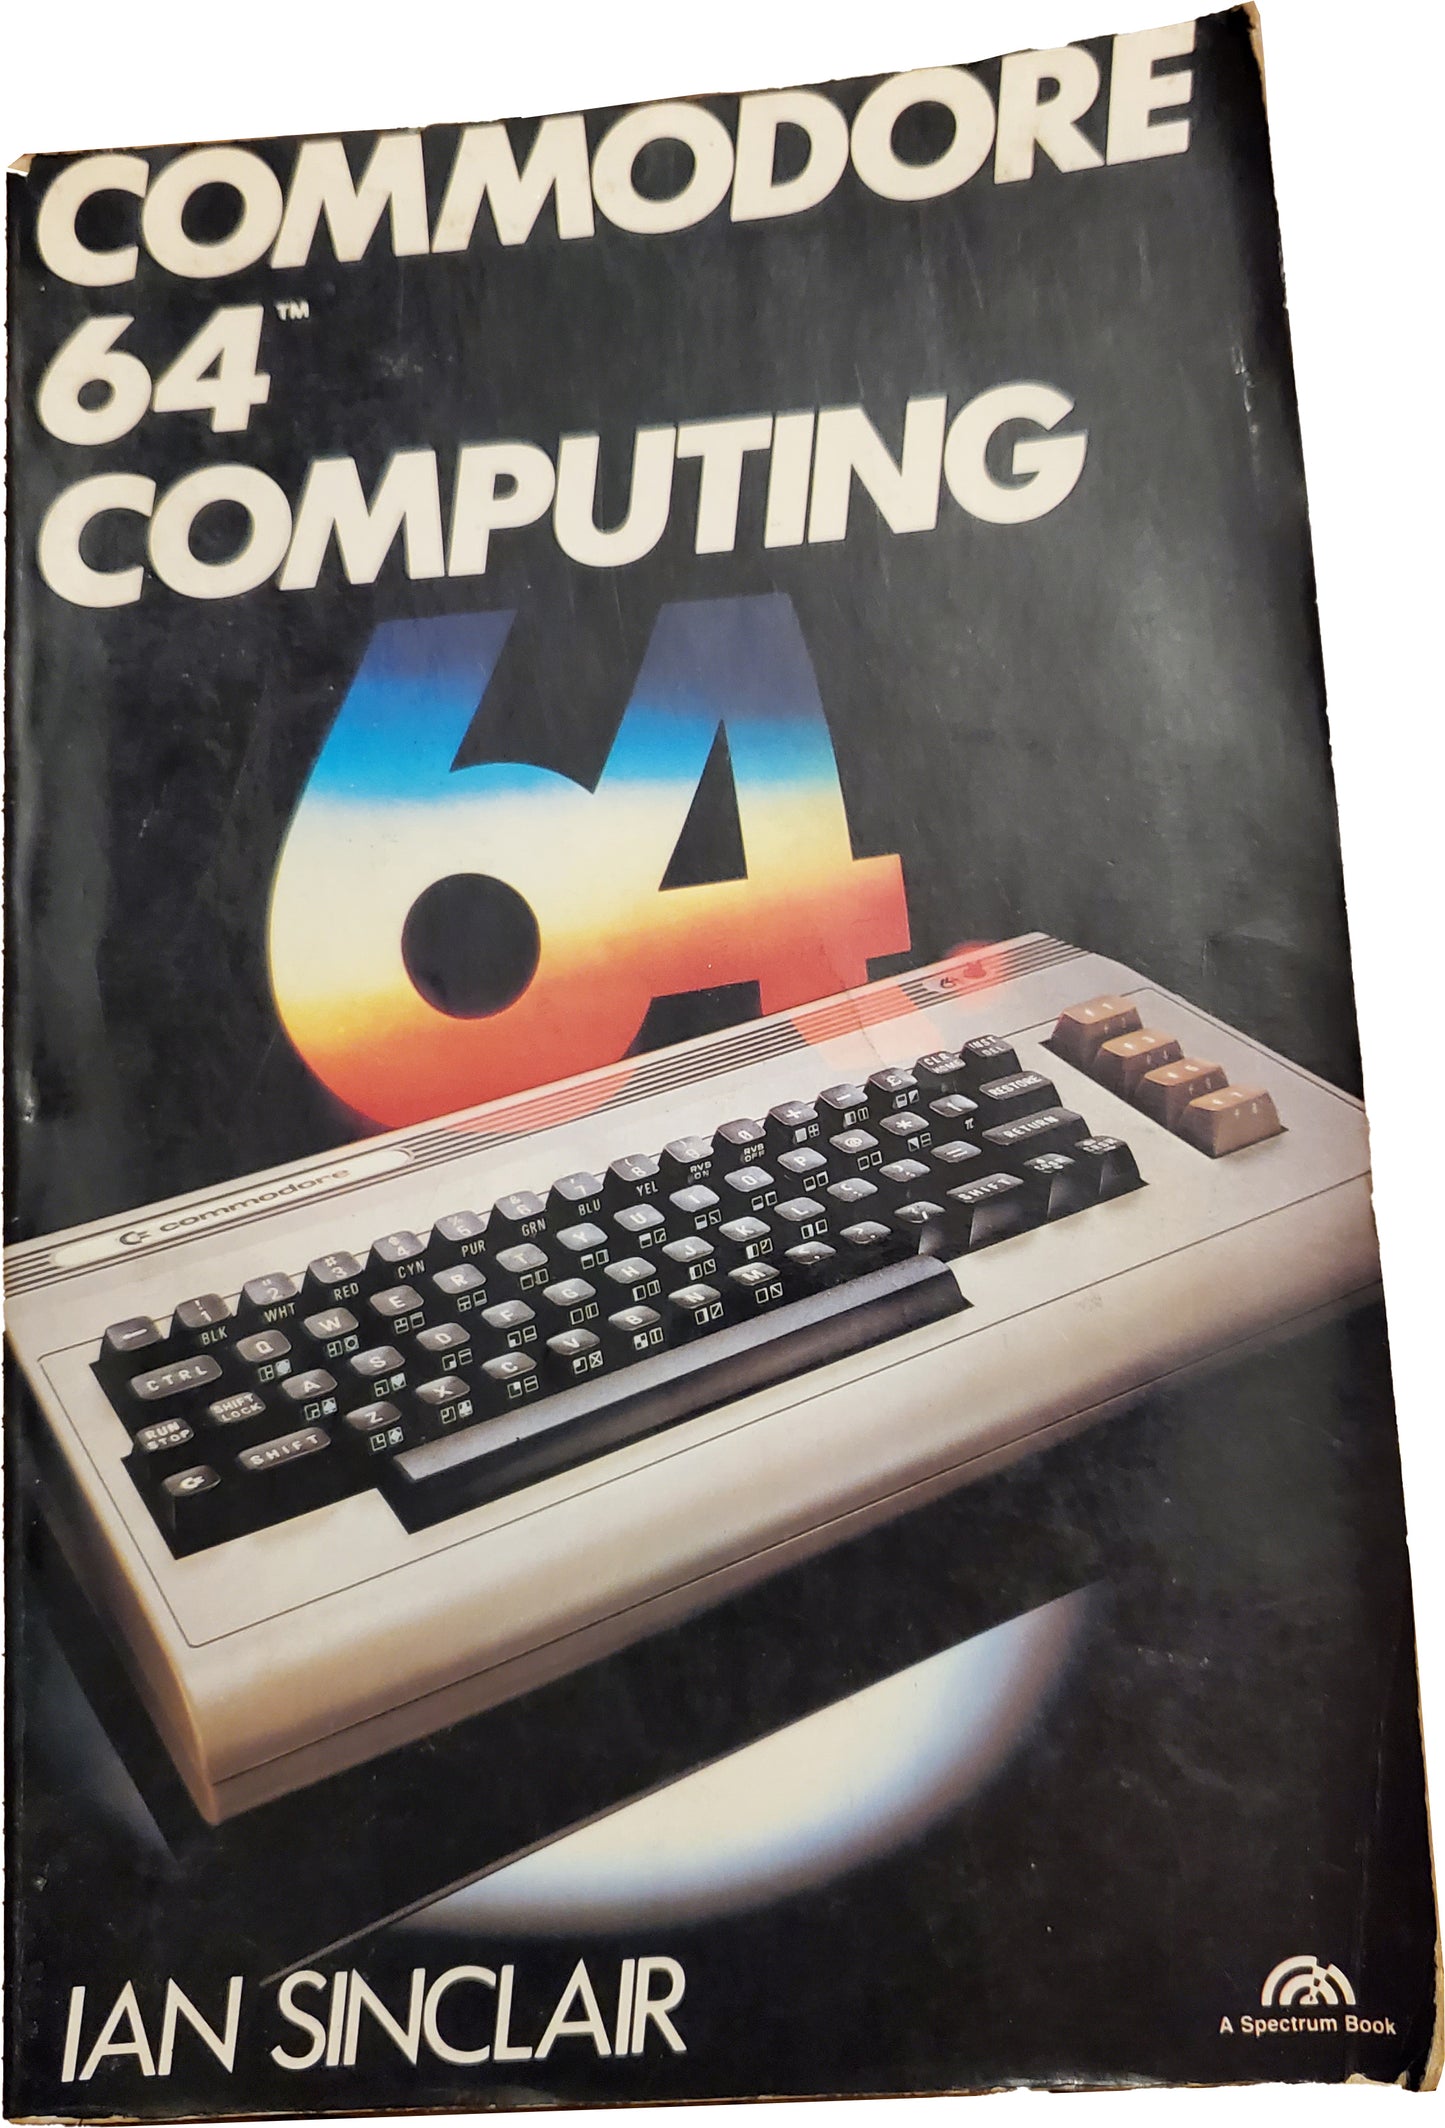 Commodore 64 Computing by Ian Sinclair